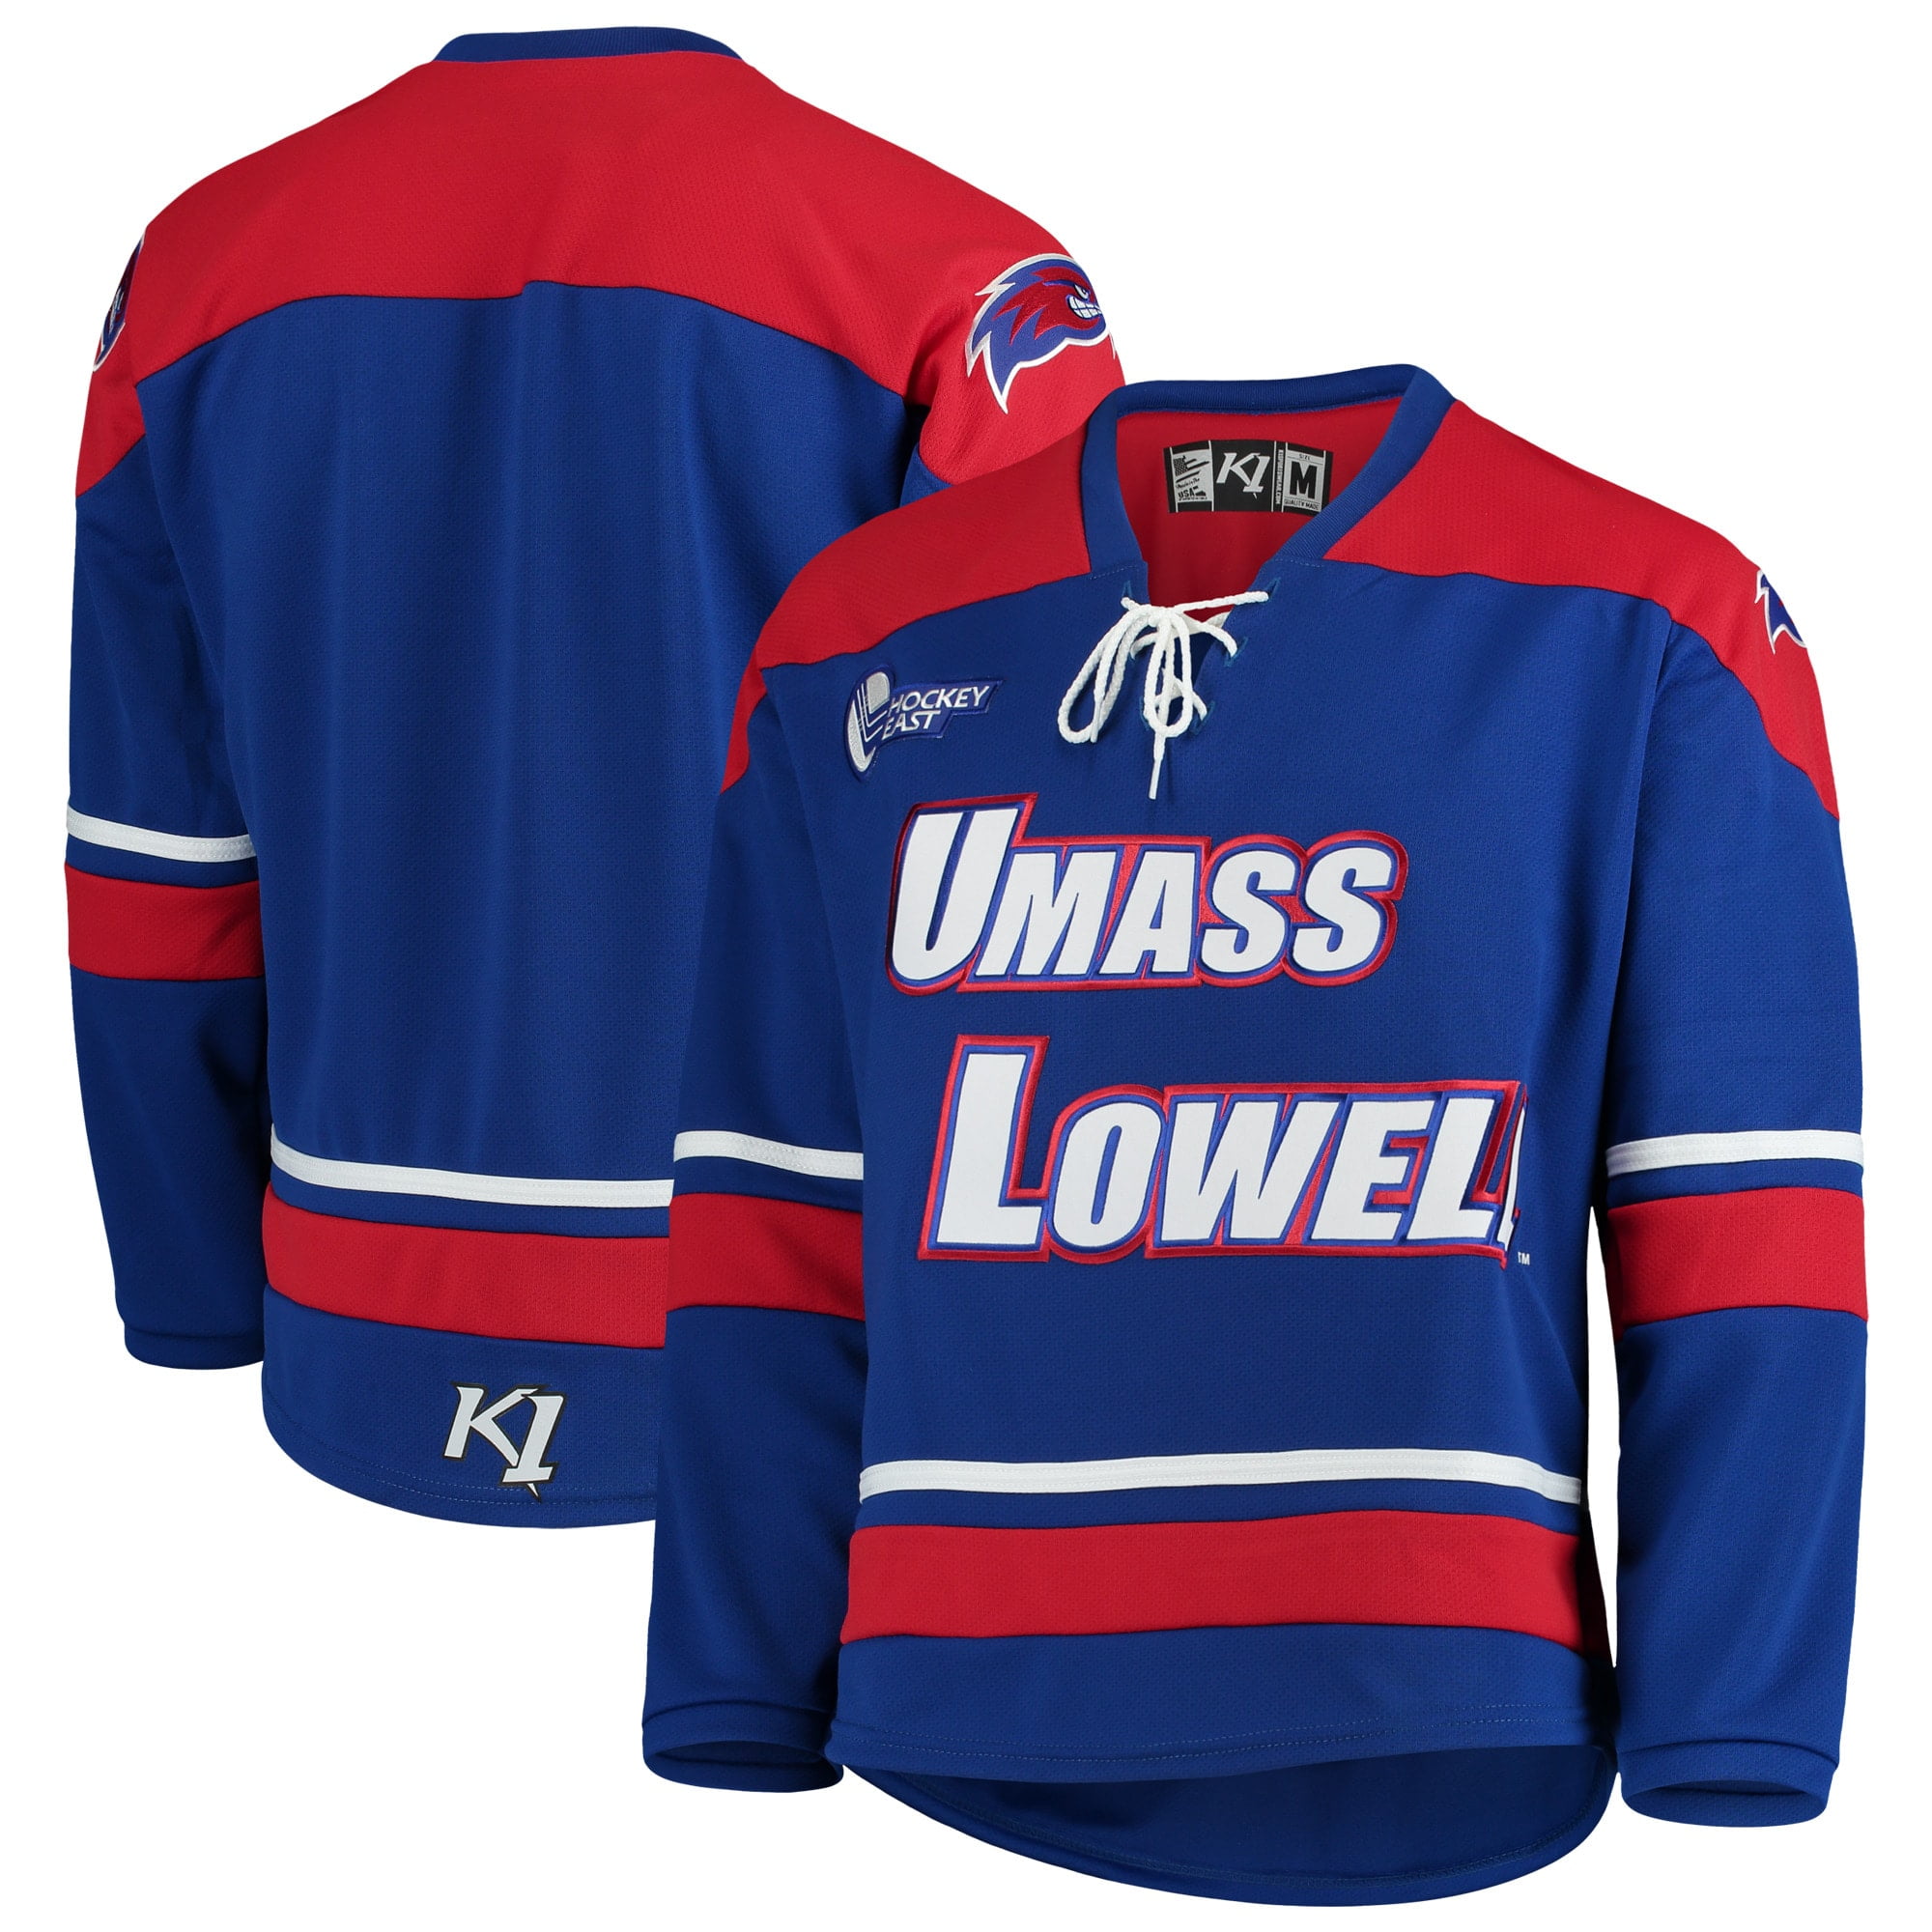 umass hockey jersey for sale